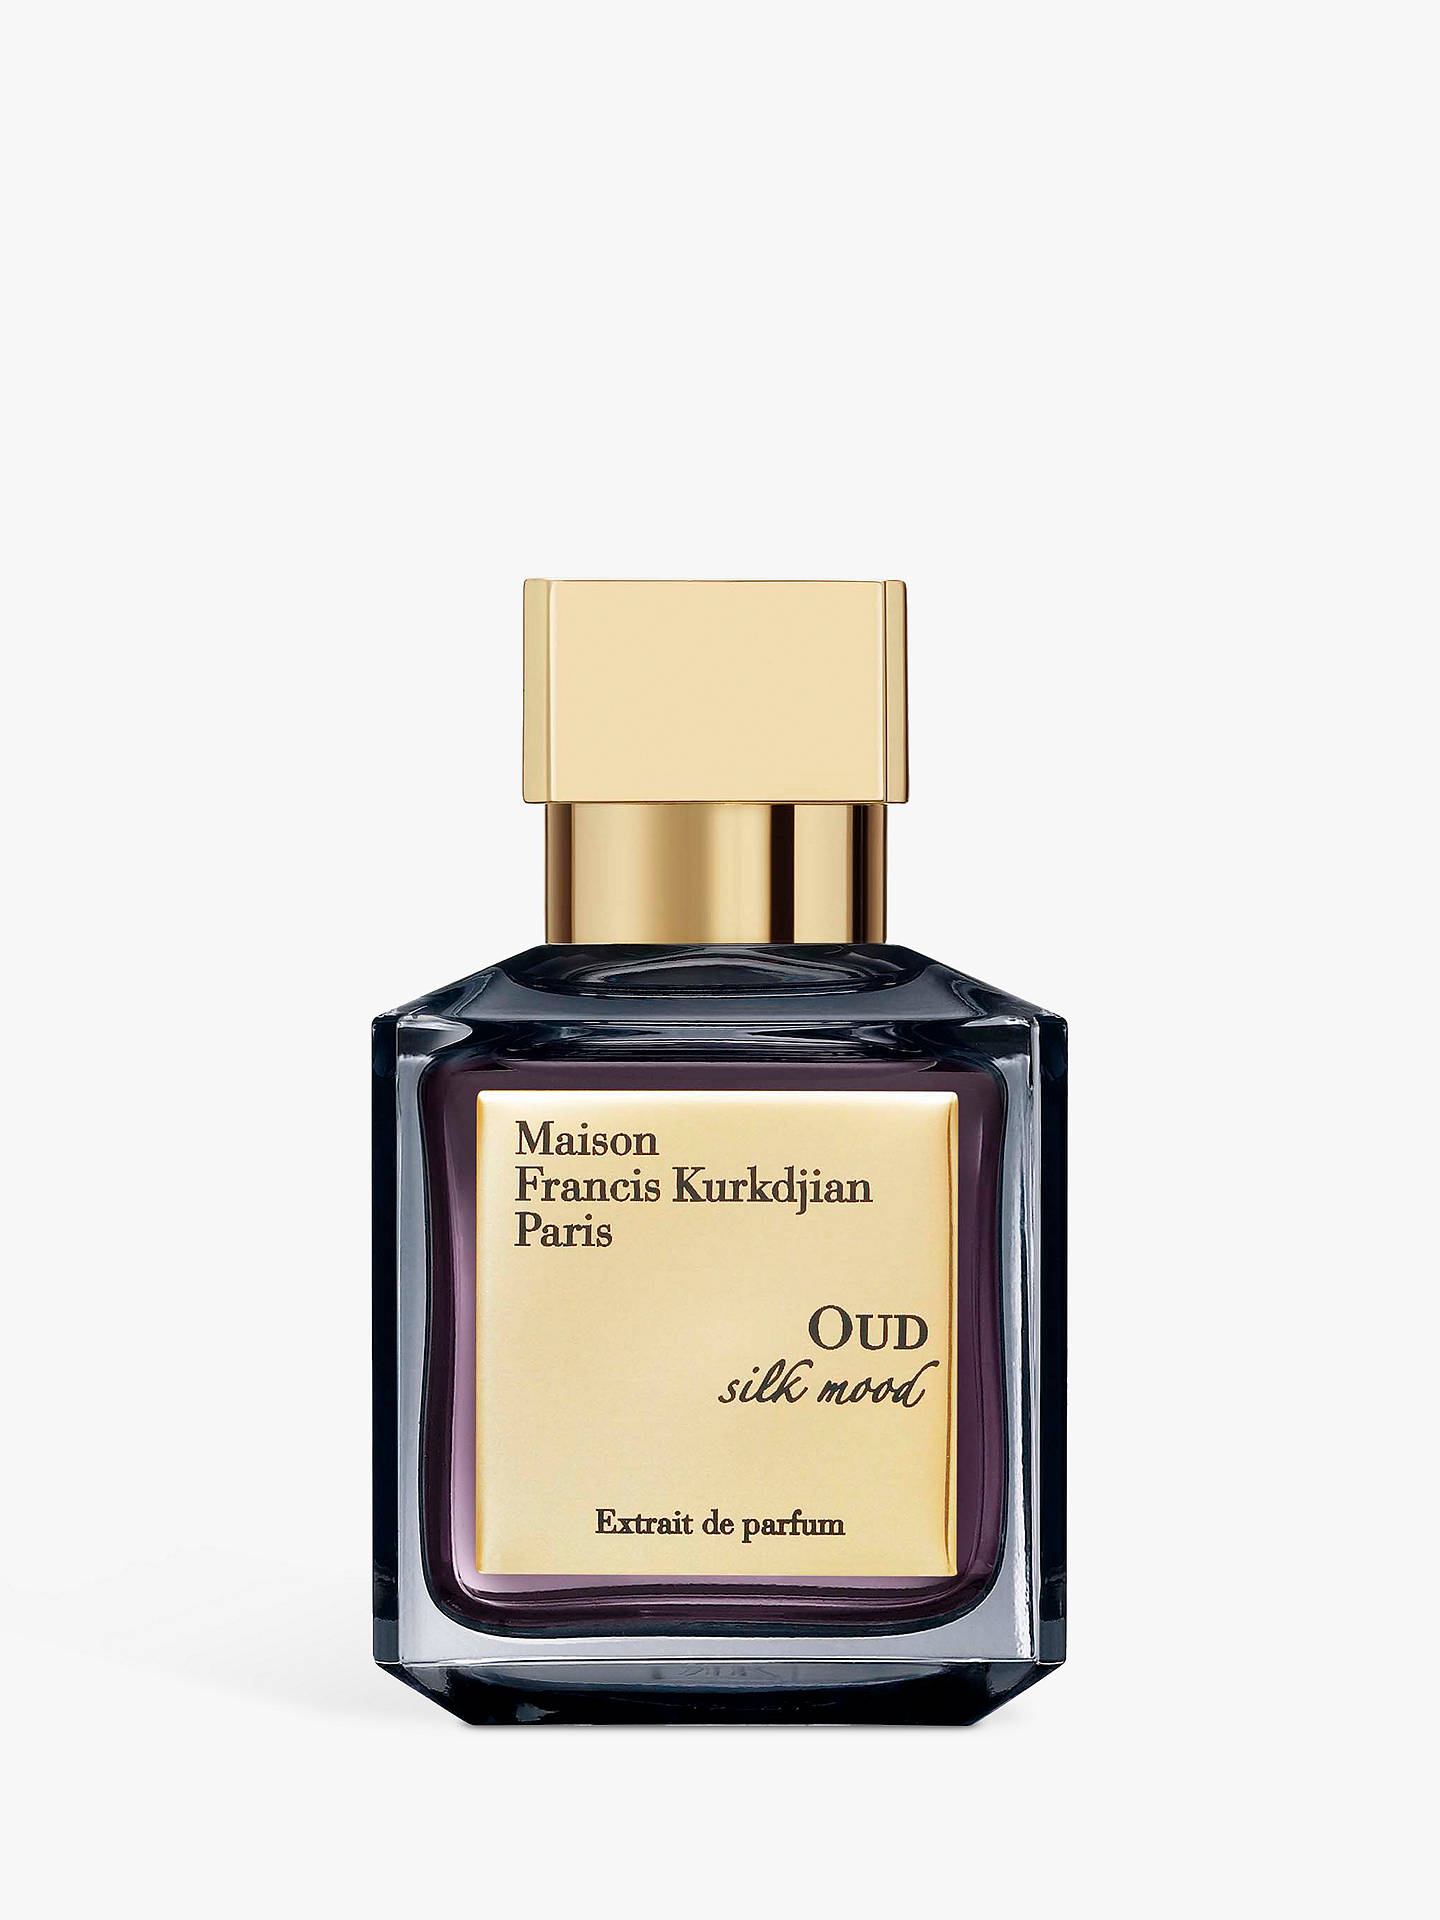 Maison Francis Kurkdjian Oud Silk Mood Extrait de Parfum, 70ml at John ...